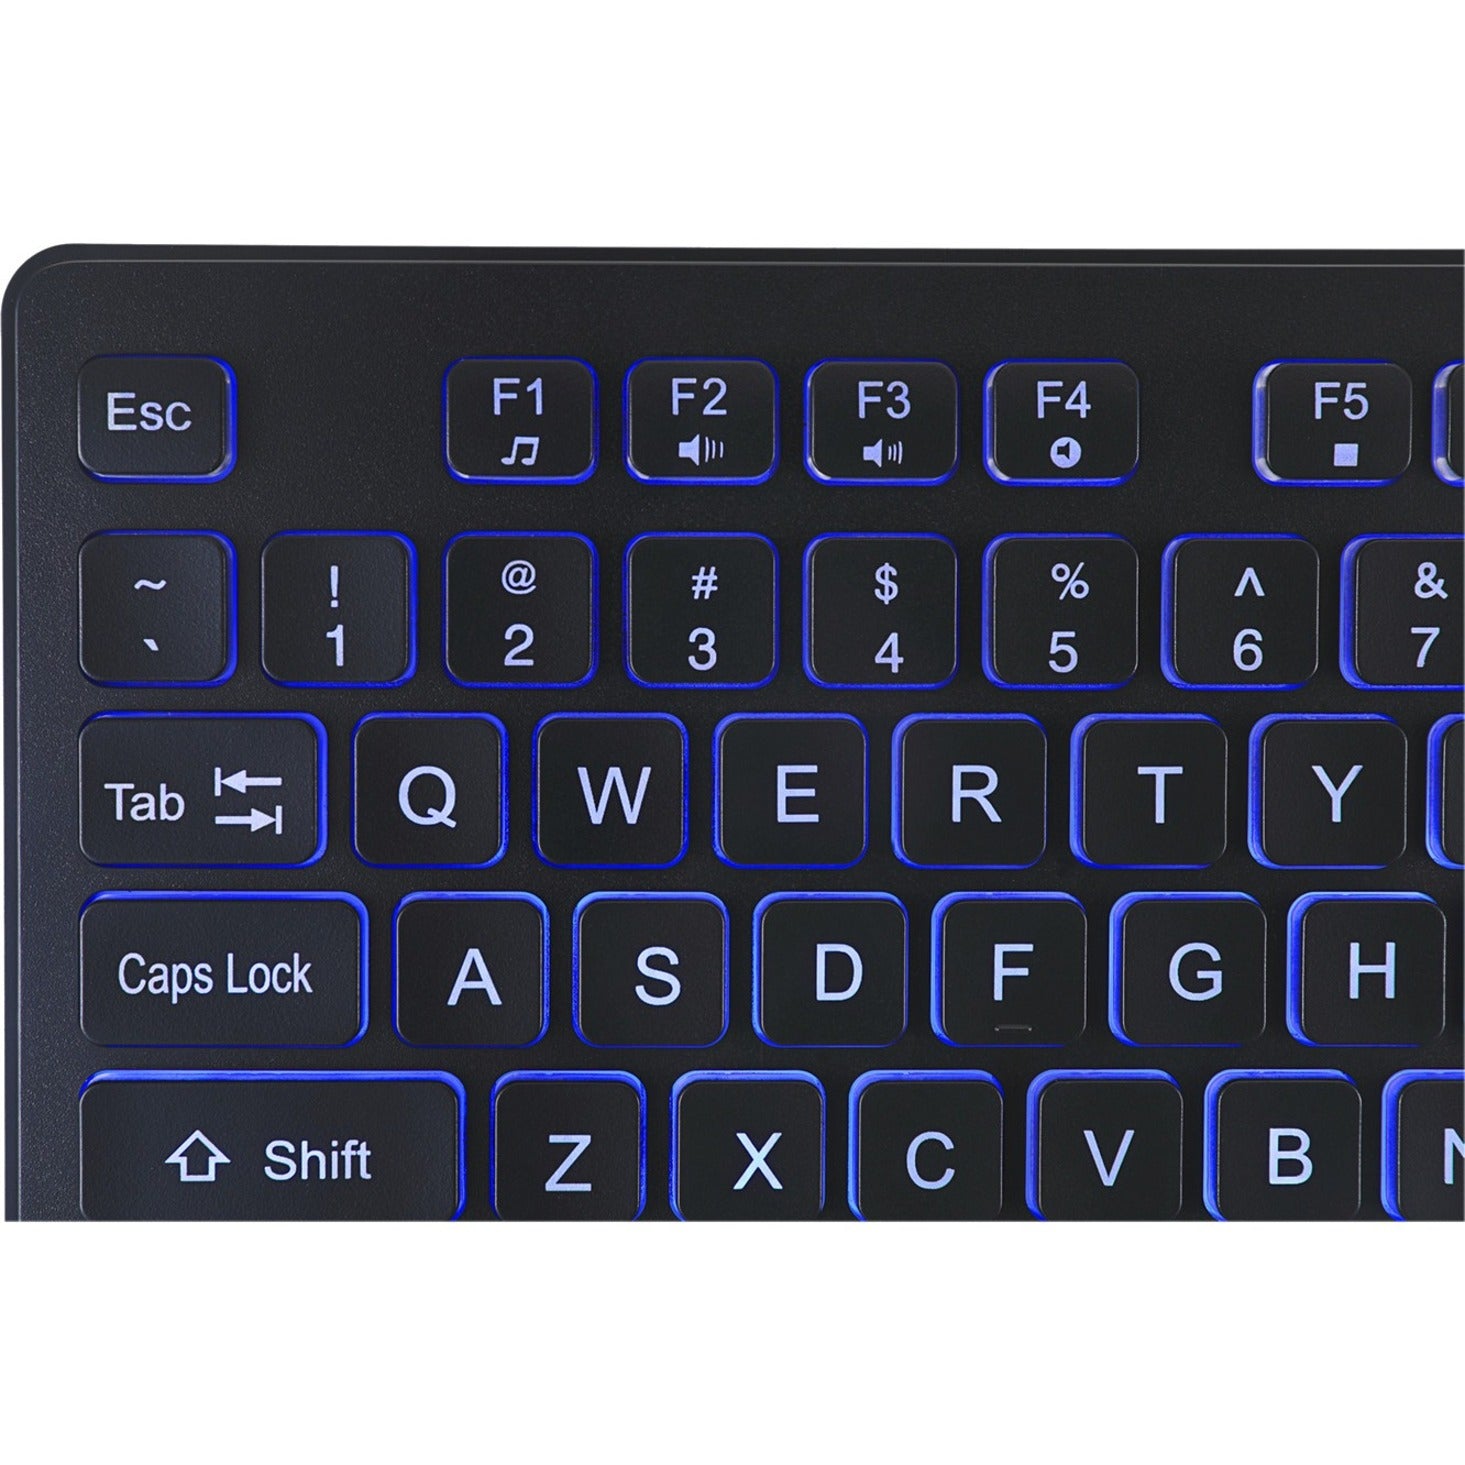 Adesso AKB-139EB Large Print Illuminated Desktop Keyboard, Backlit, Water Resistant, Quiet Keys